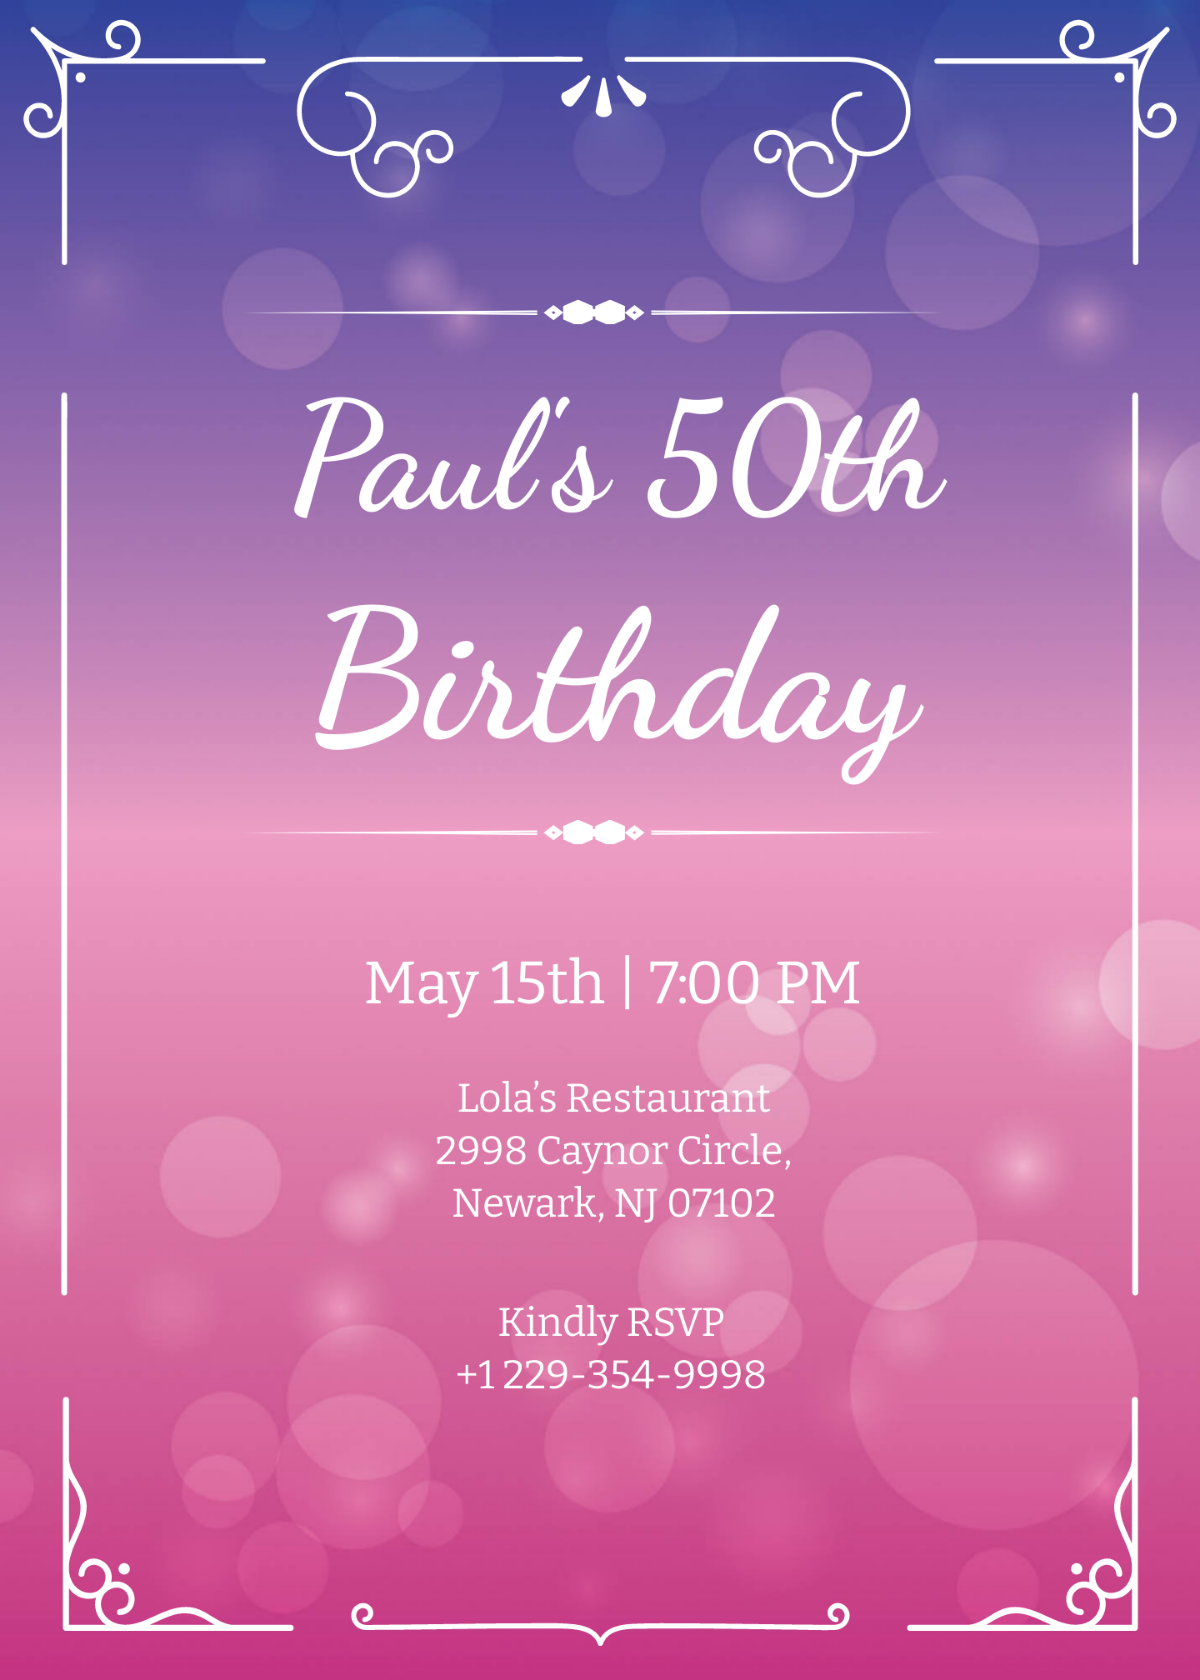 50th Birthday Invitation